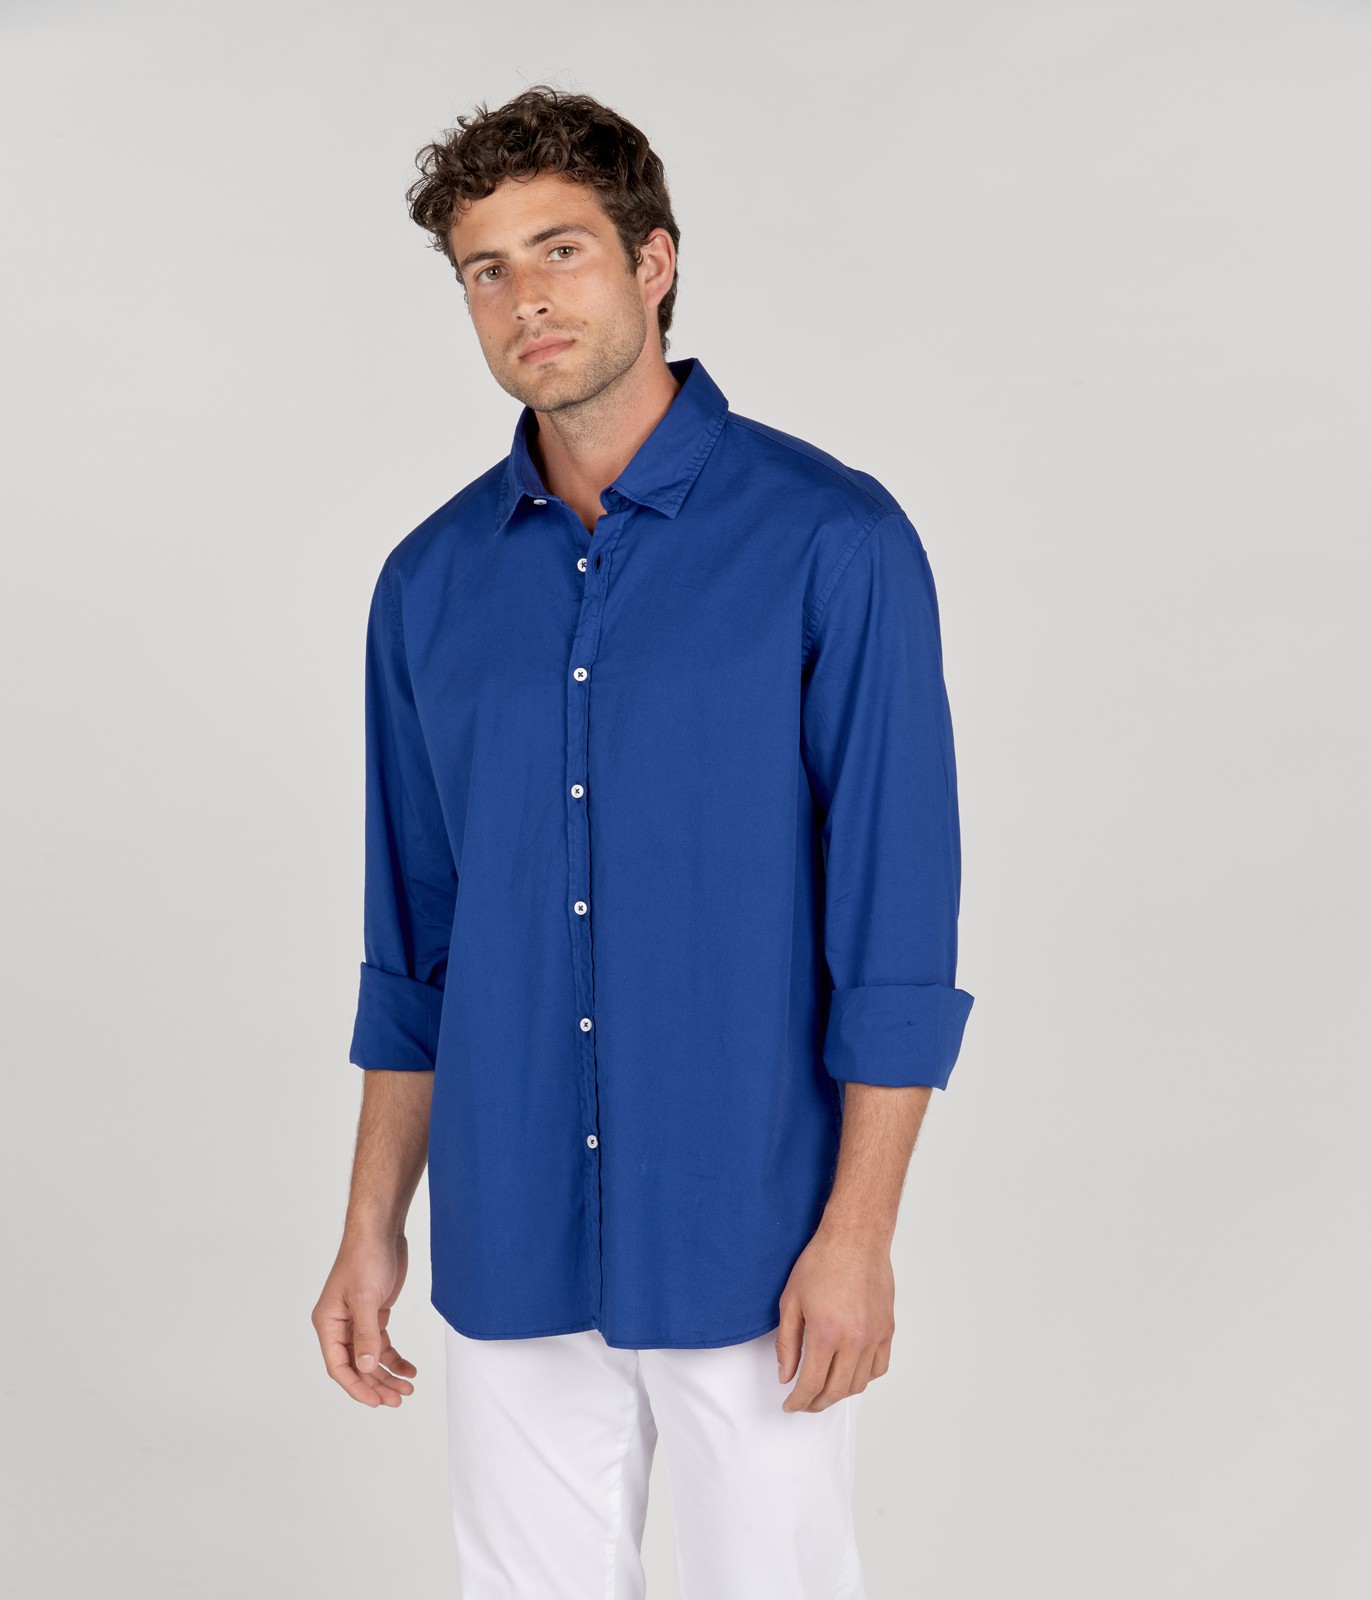 Plain Quality brand long for color Europann shirt sleeves indigo men